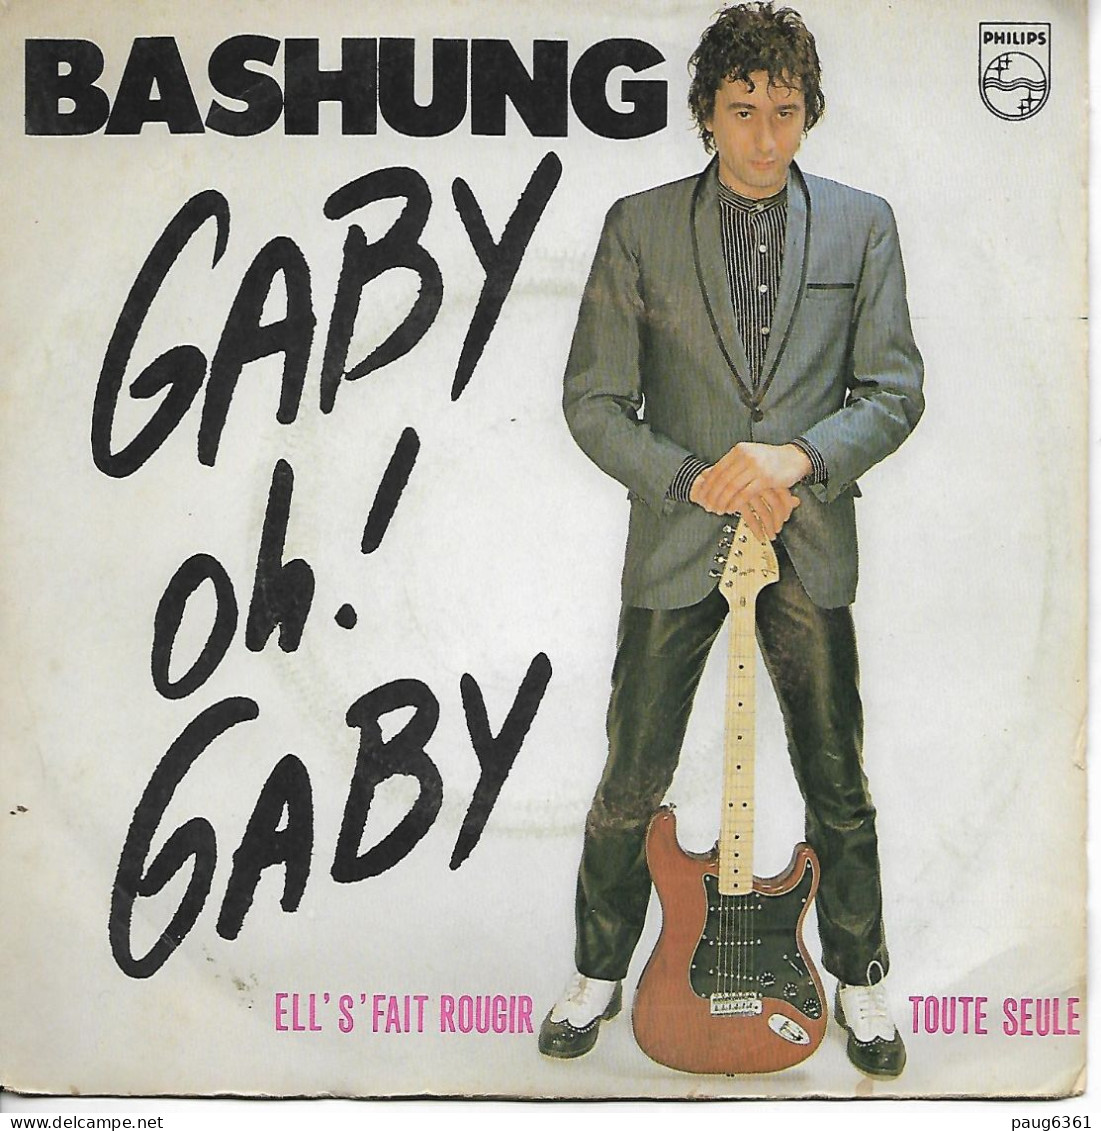 Bashung Gaby Oh! Gaby - Ell's'fait Rougir Toute Seule - Philips - 6172 310 PG 100 - Phonogram  BON ETAT VG - Altri - Francese